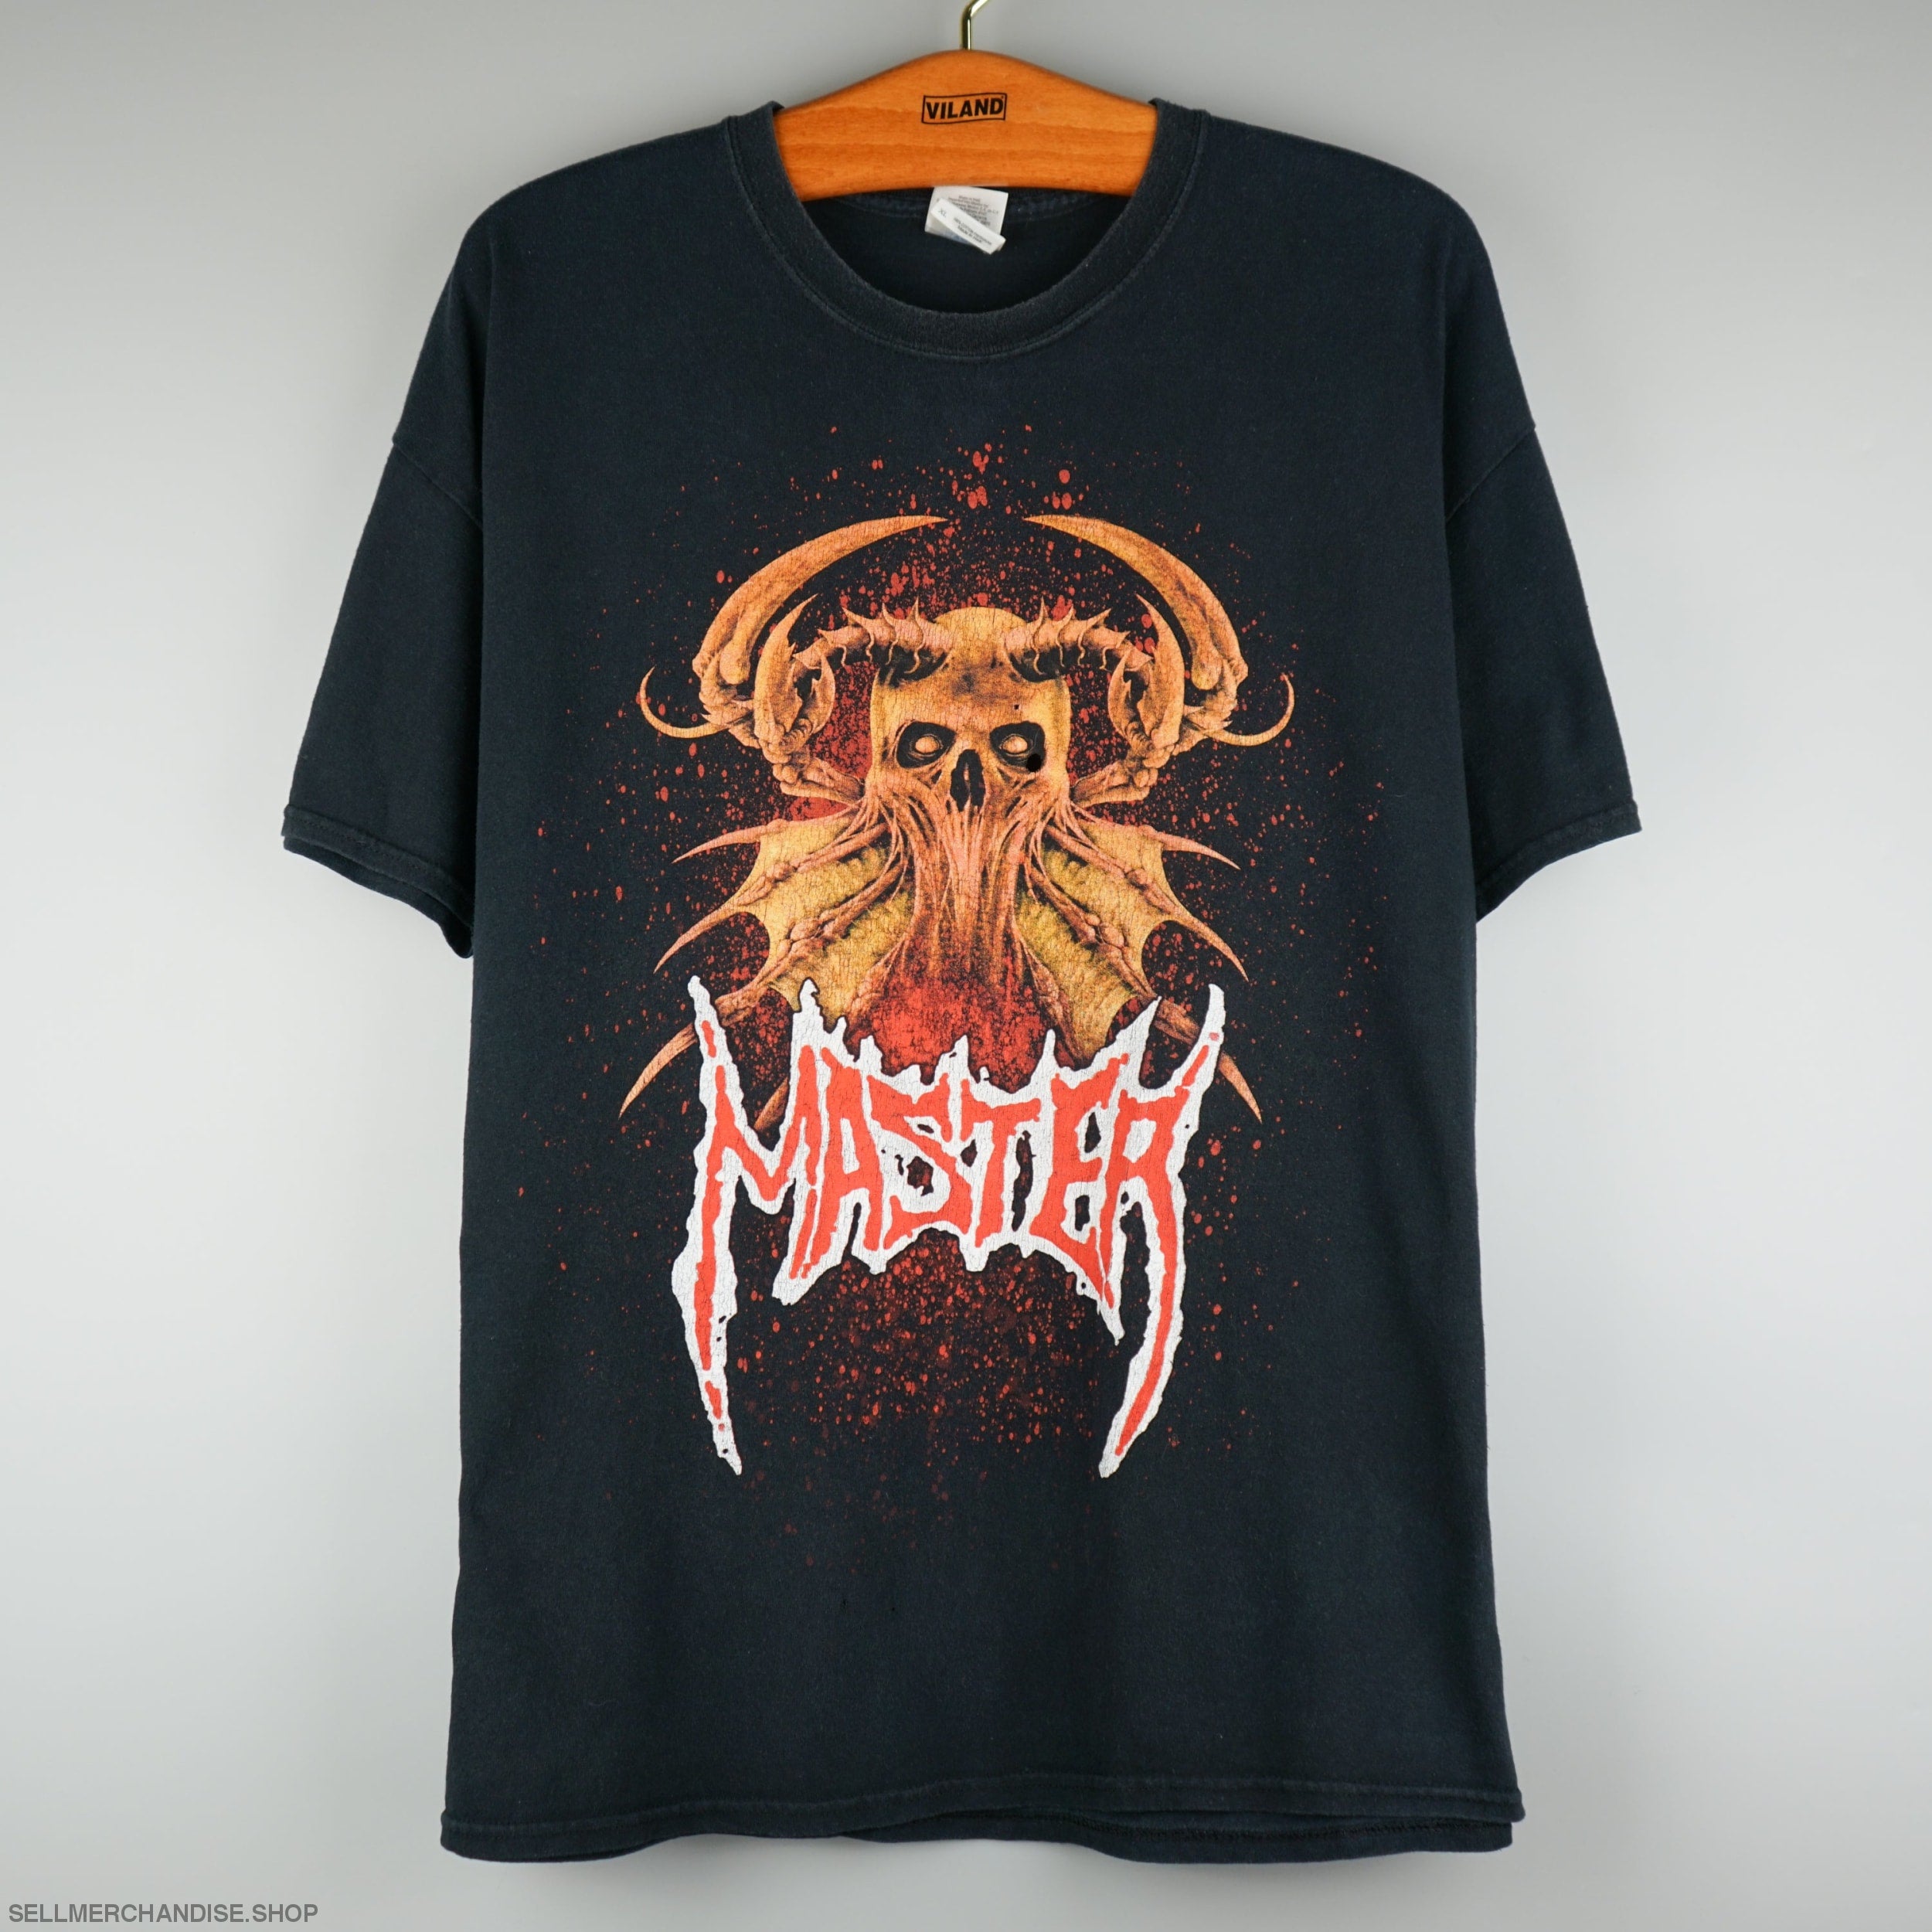 Vintage 1993 Samael Band T-Shirt Black Metal